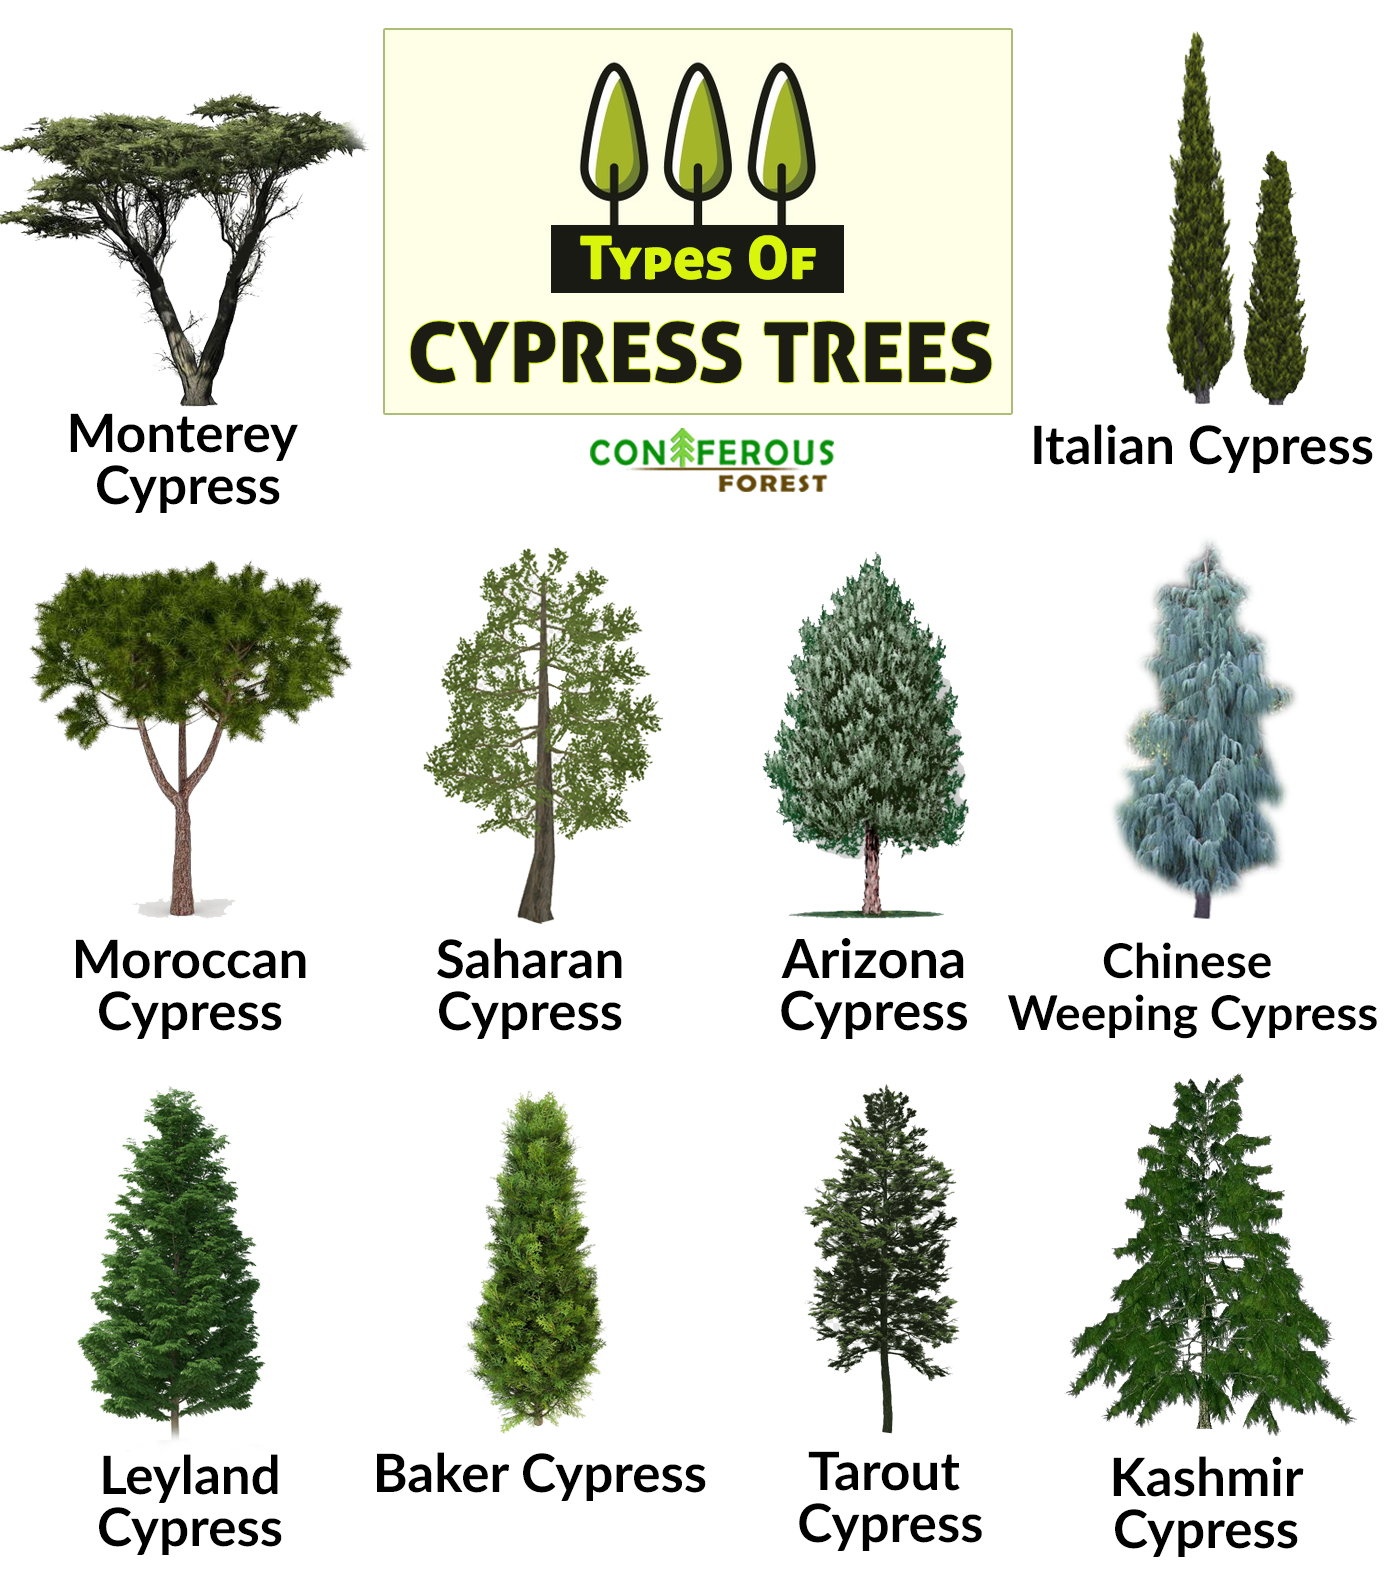 cyprus tree with shrubs